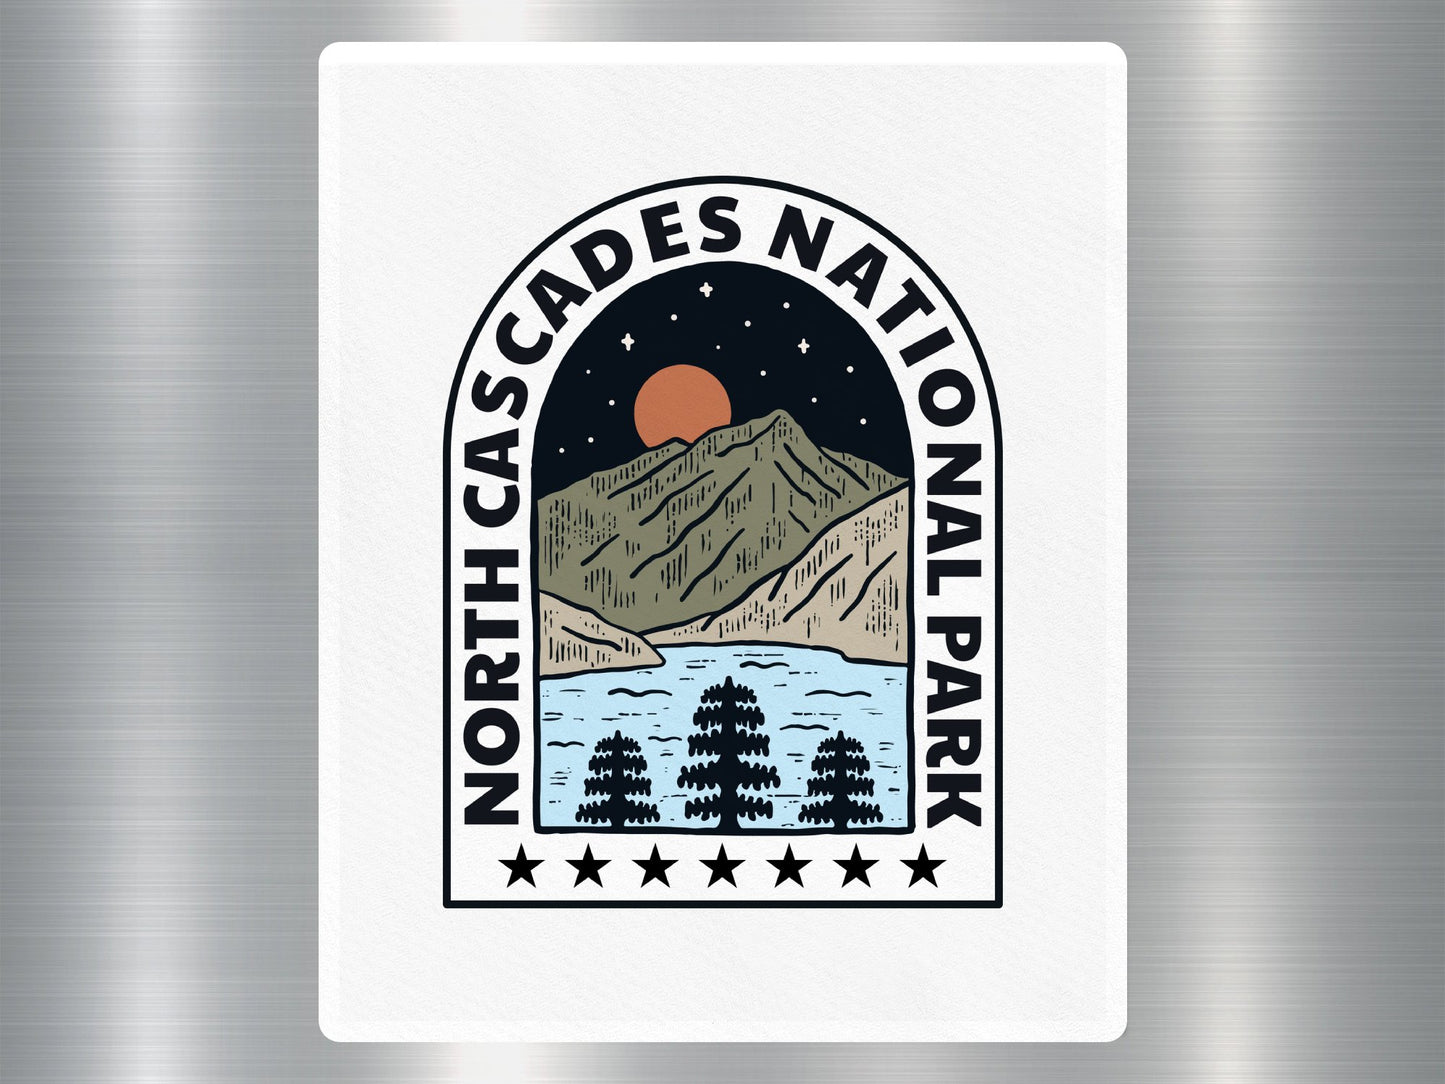 North Cascades National Park Travel Sticker